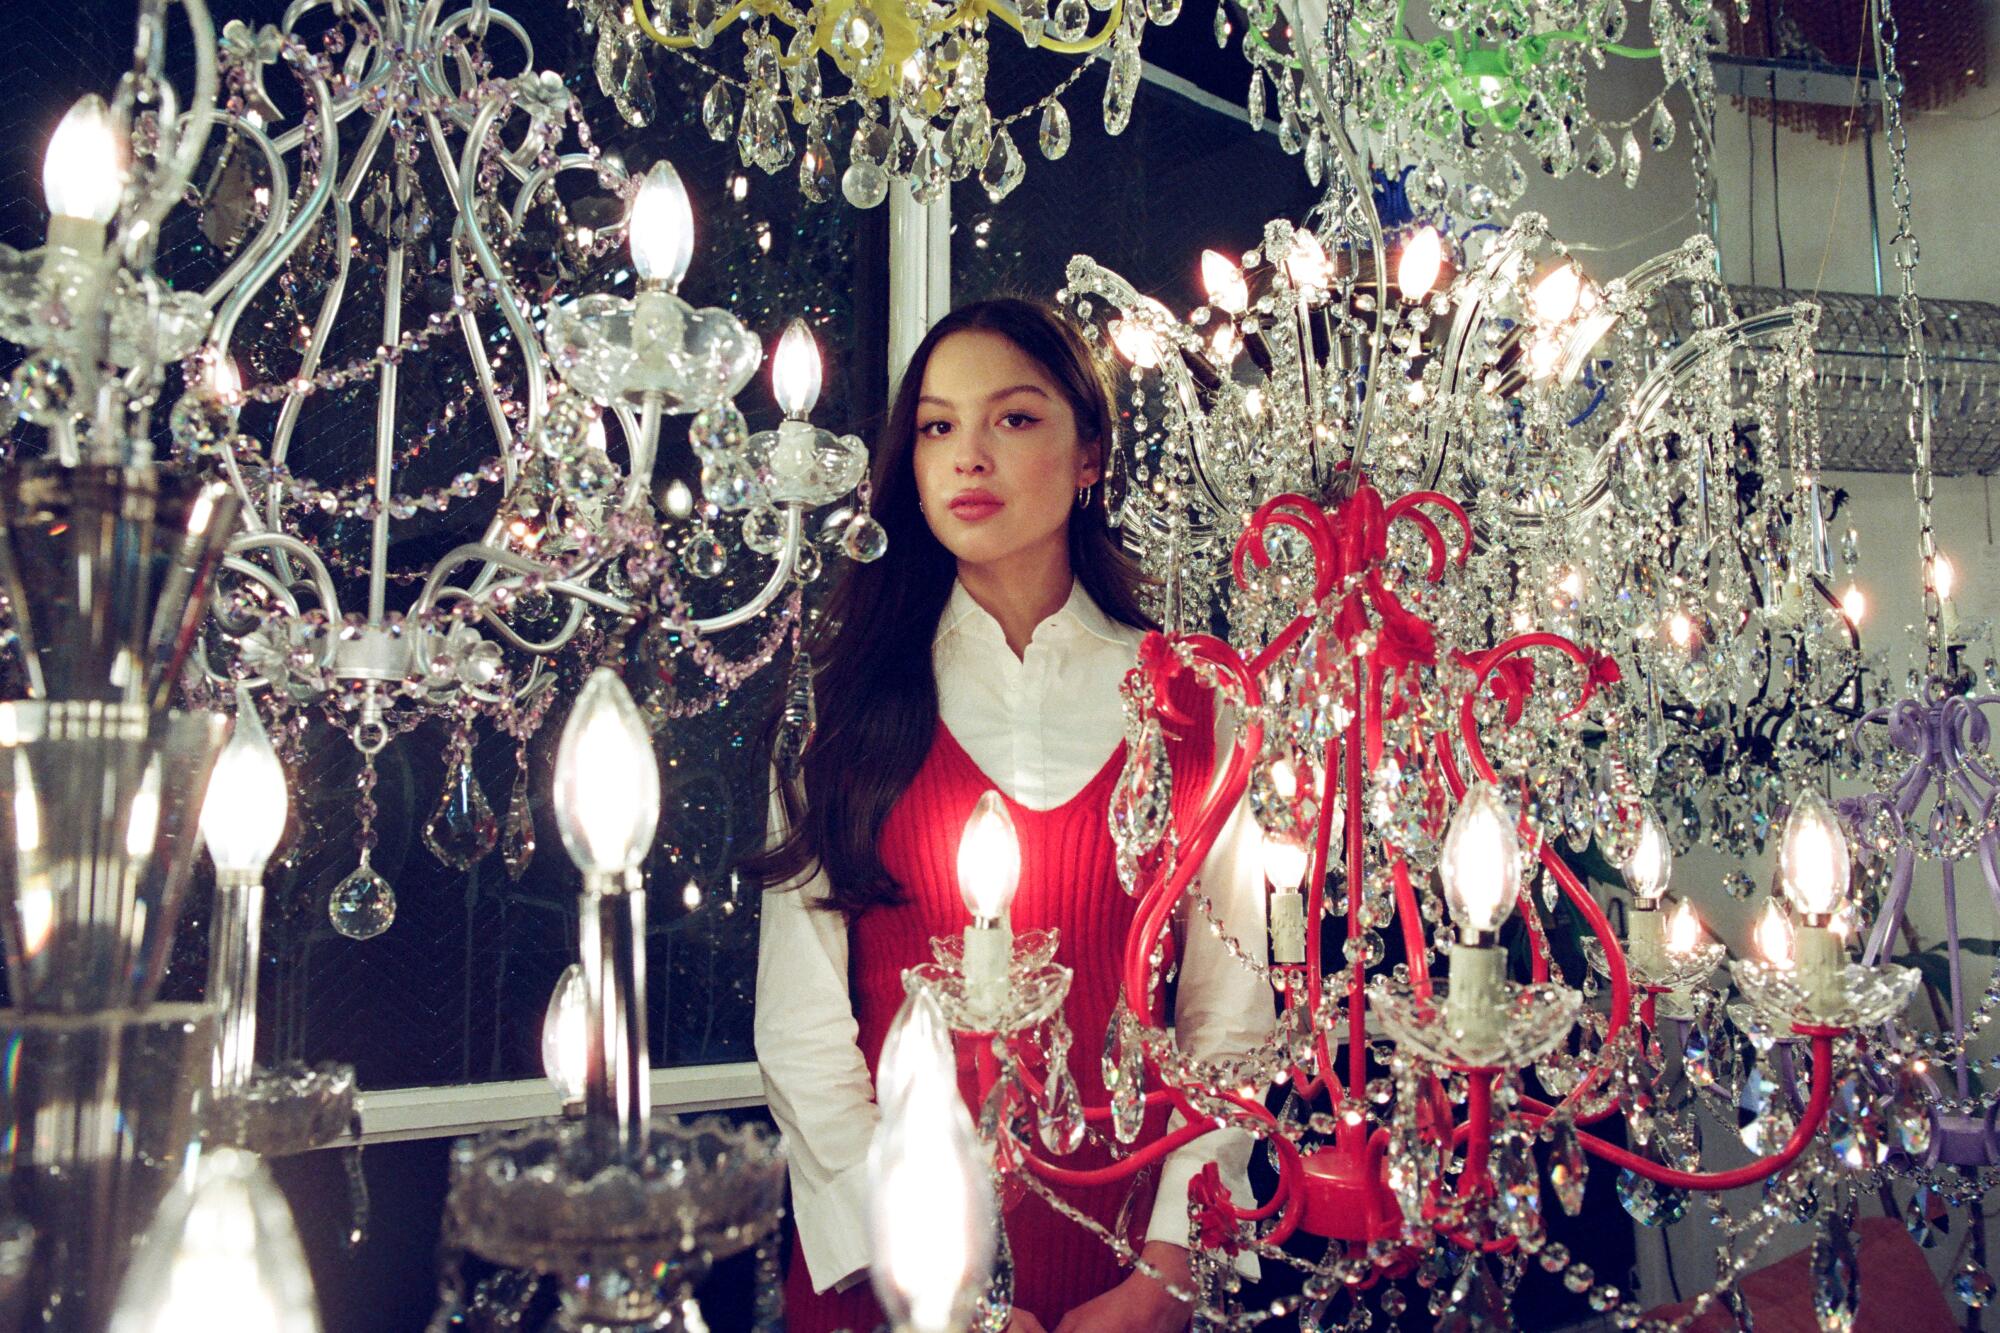 Olivia Rodrigo photographed amid chandeliers